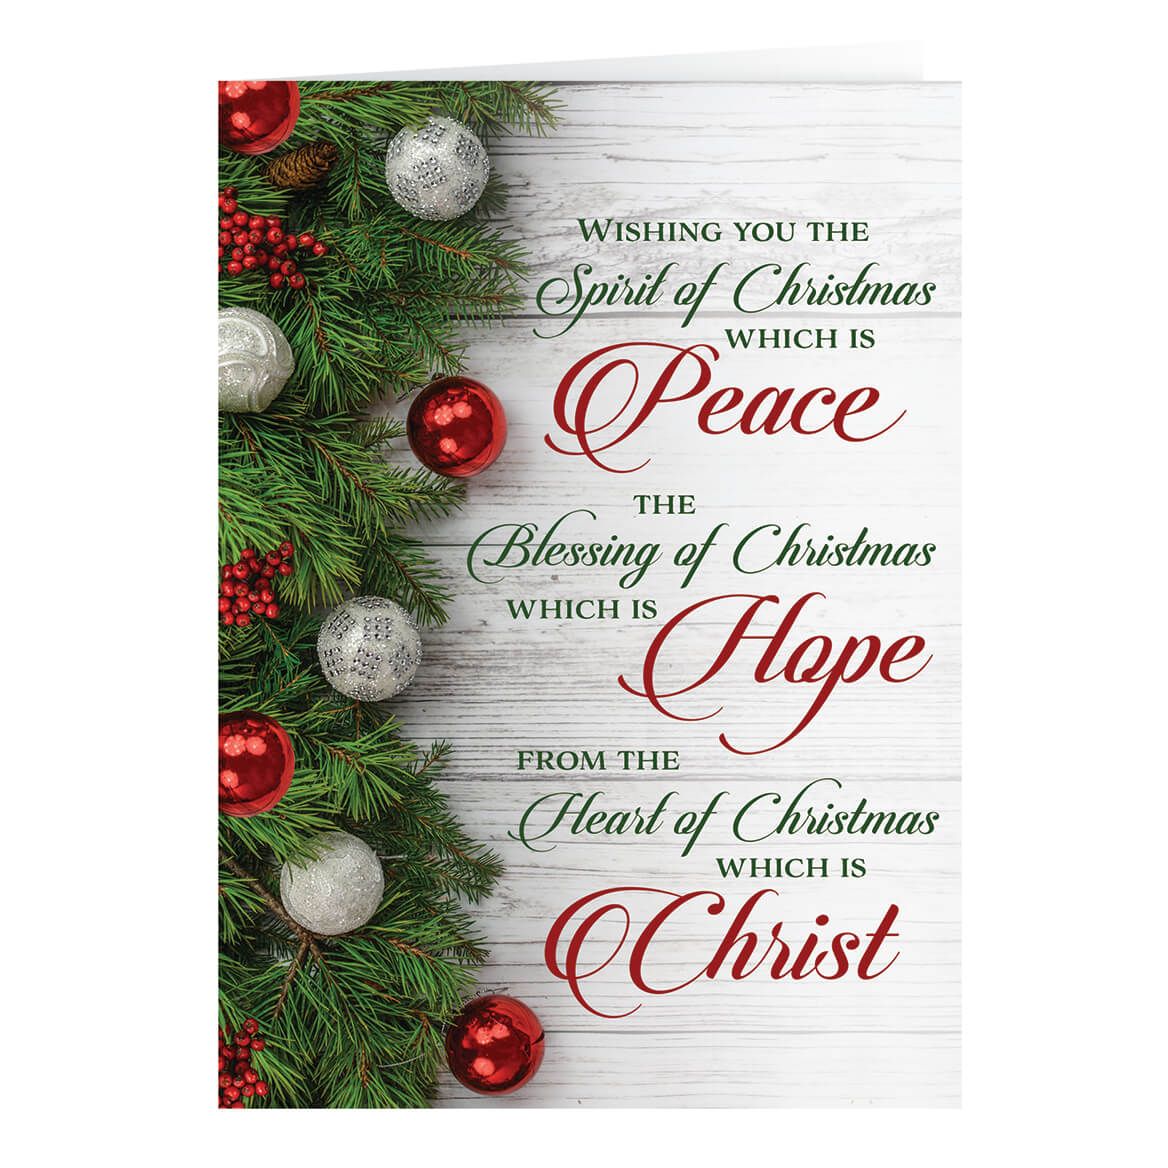 Peace, Hope, Christ Christmas Card Set of 20 + '-' + 364061